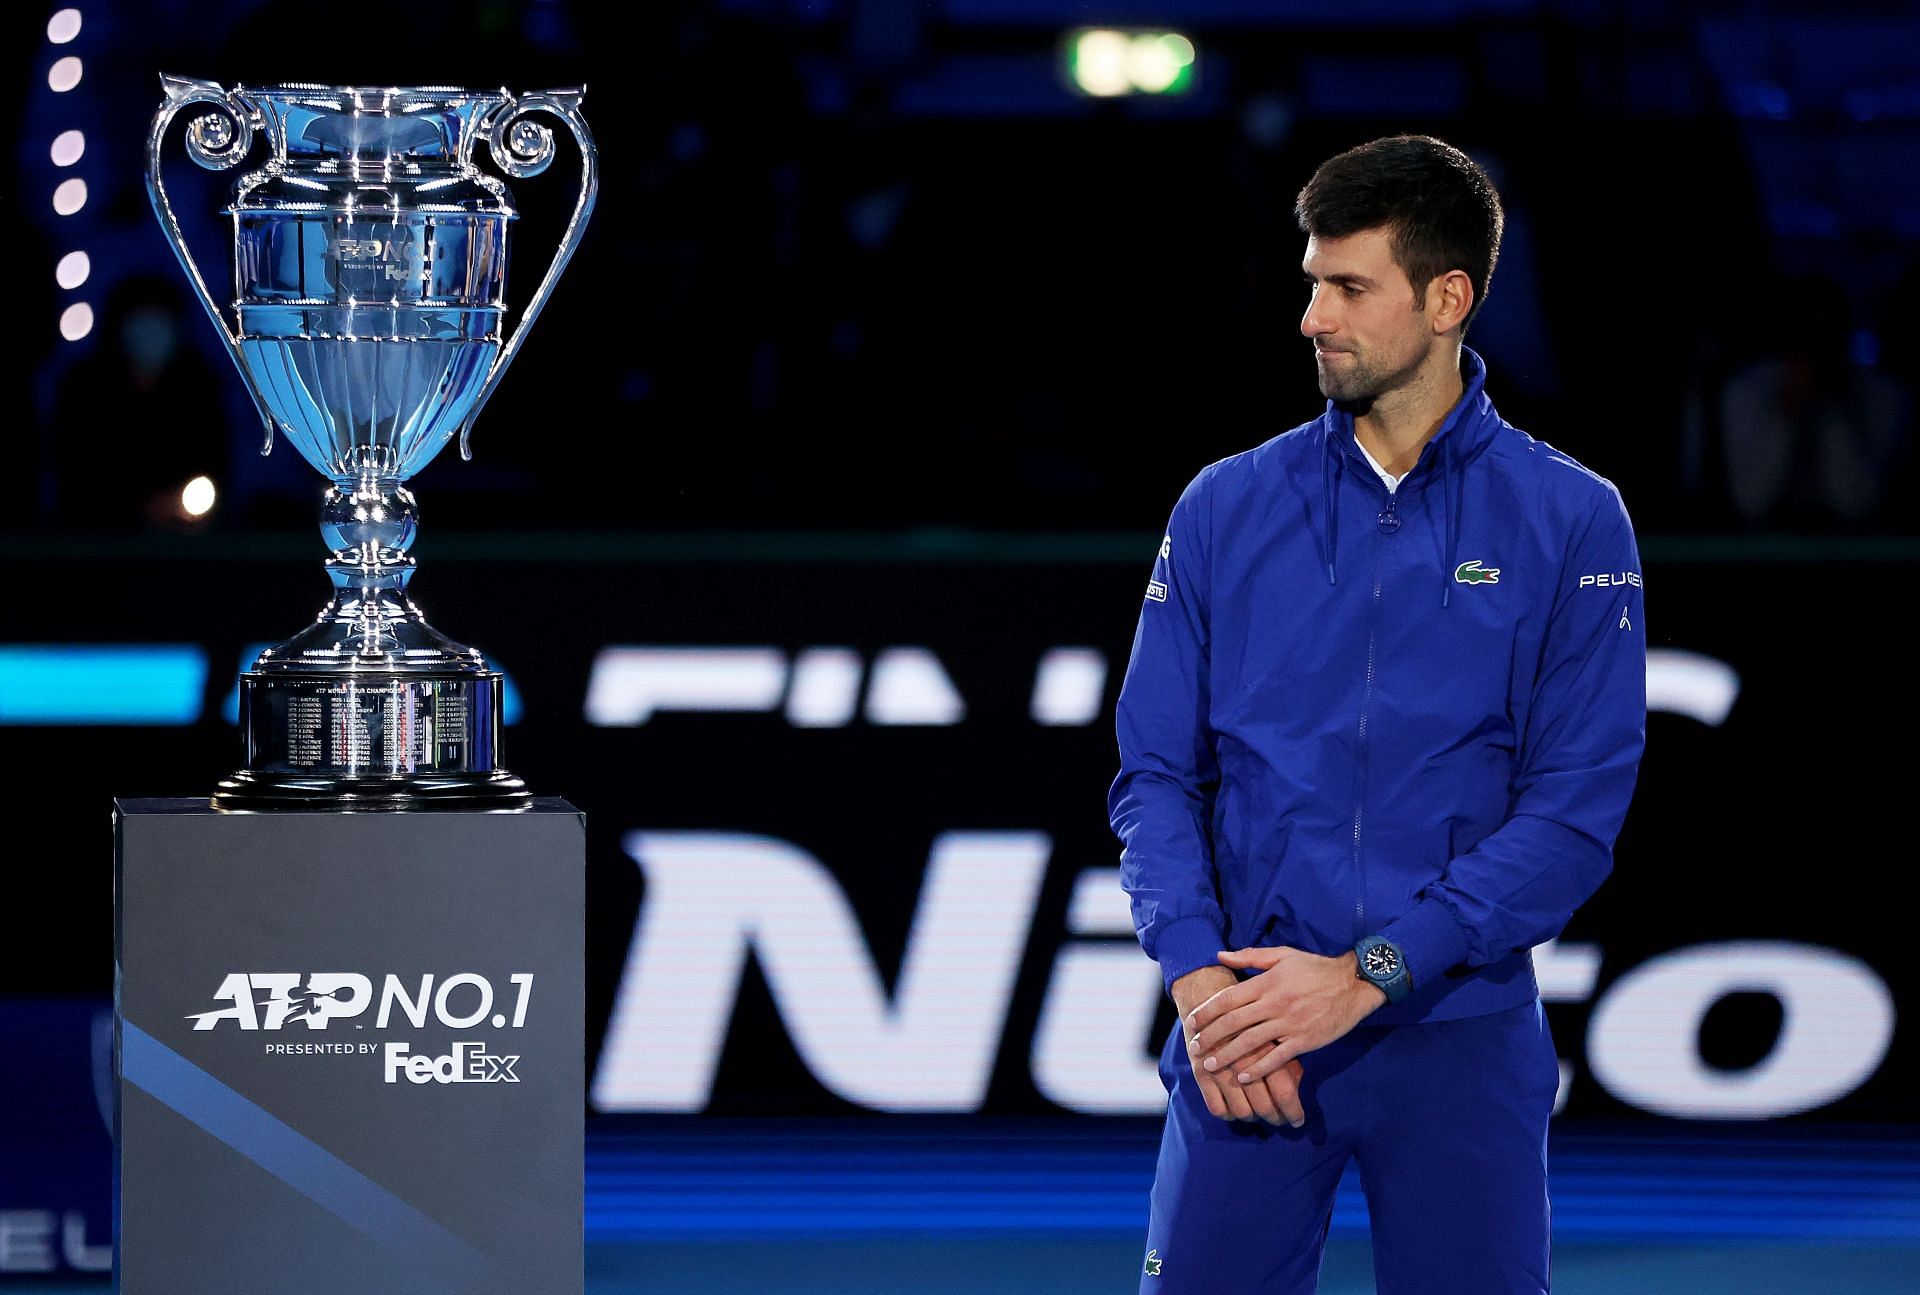 Novak Djokovic with the ATP World No. 1 trophy